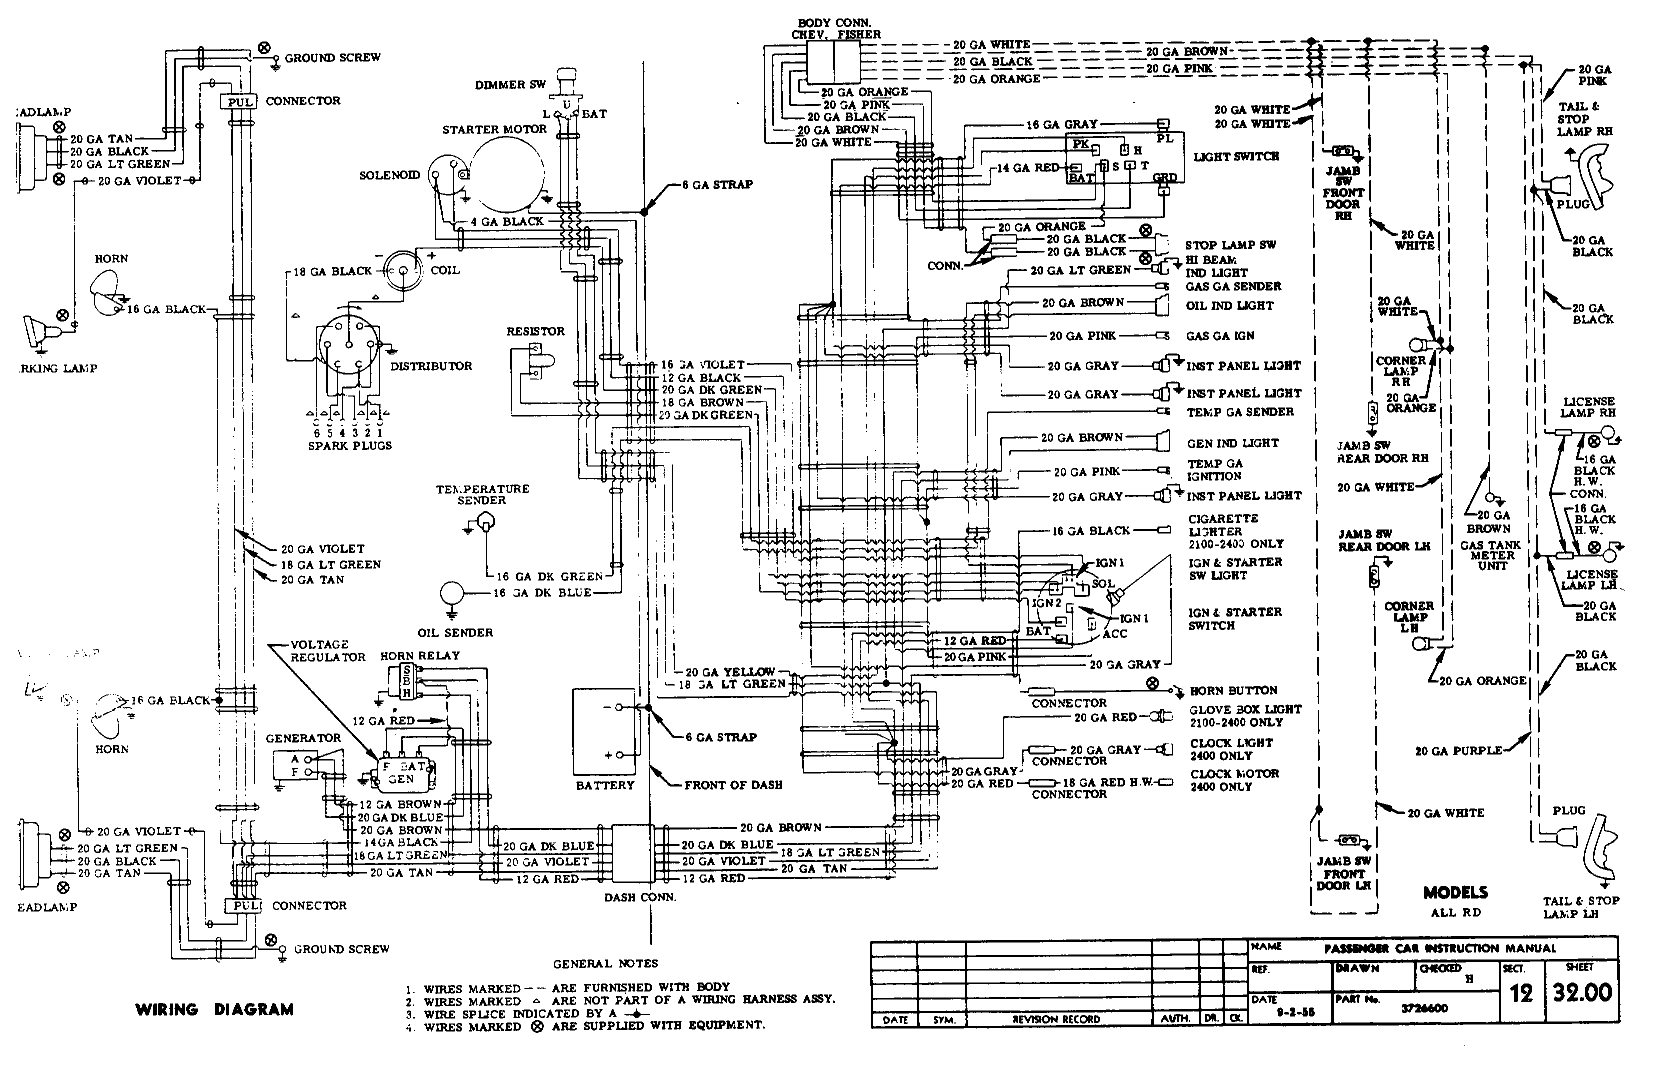 Wiring Diagram For 55 Bel Air - Complete Wiring Schemas